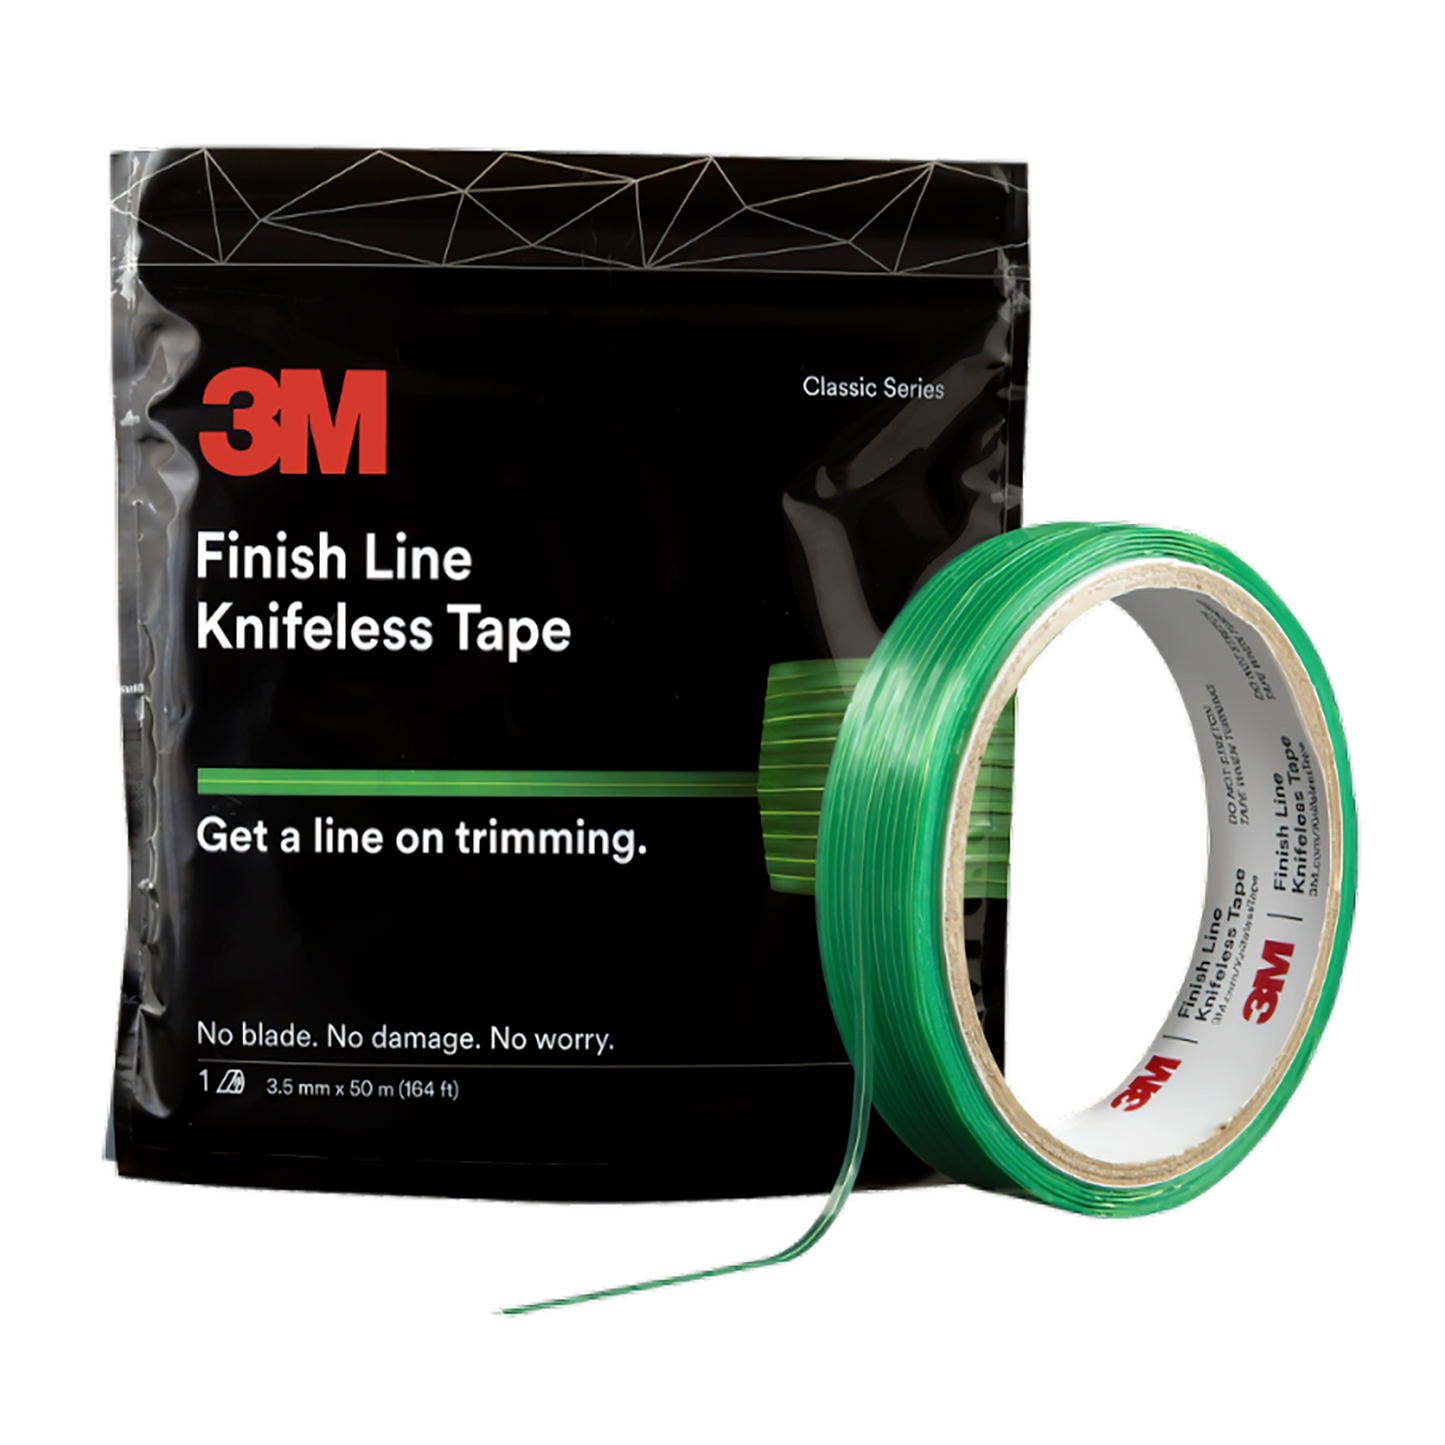 3M Knifeless Tape Finish Line Series (50m)